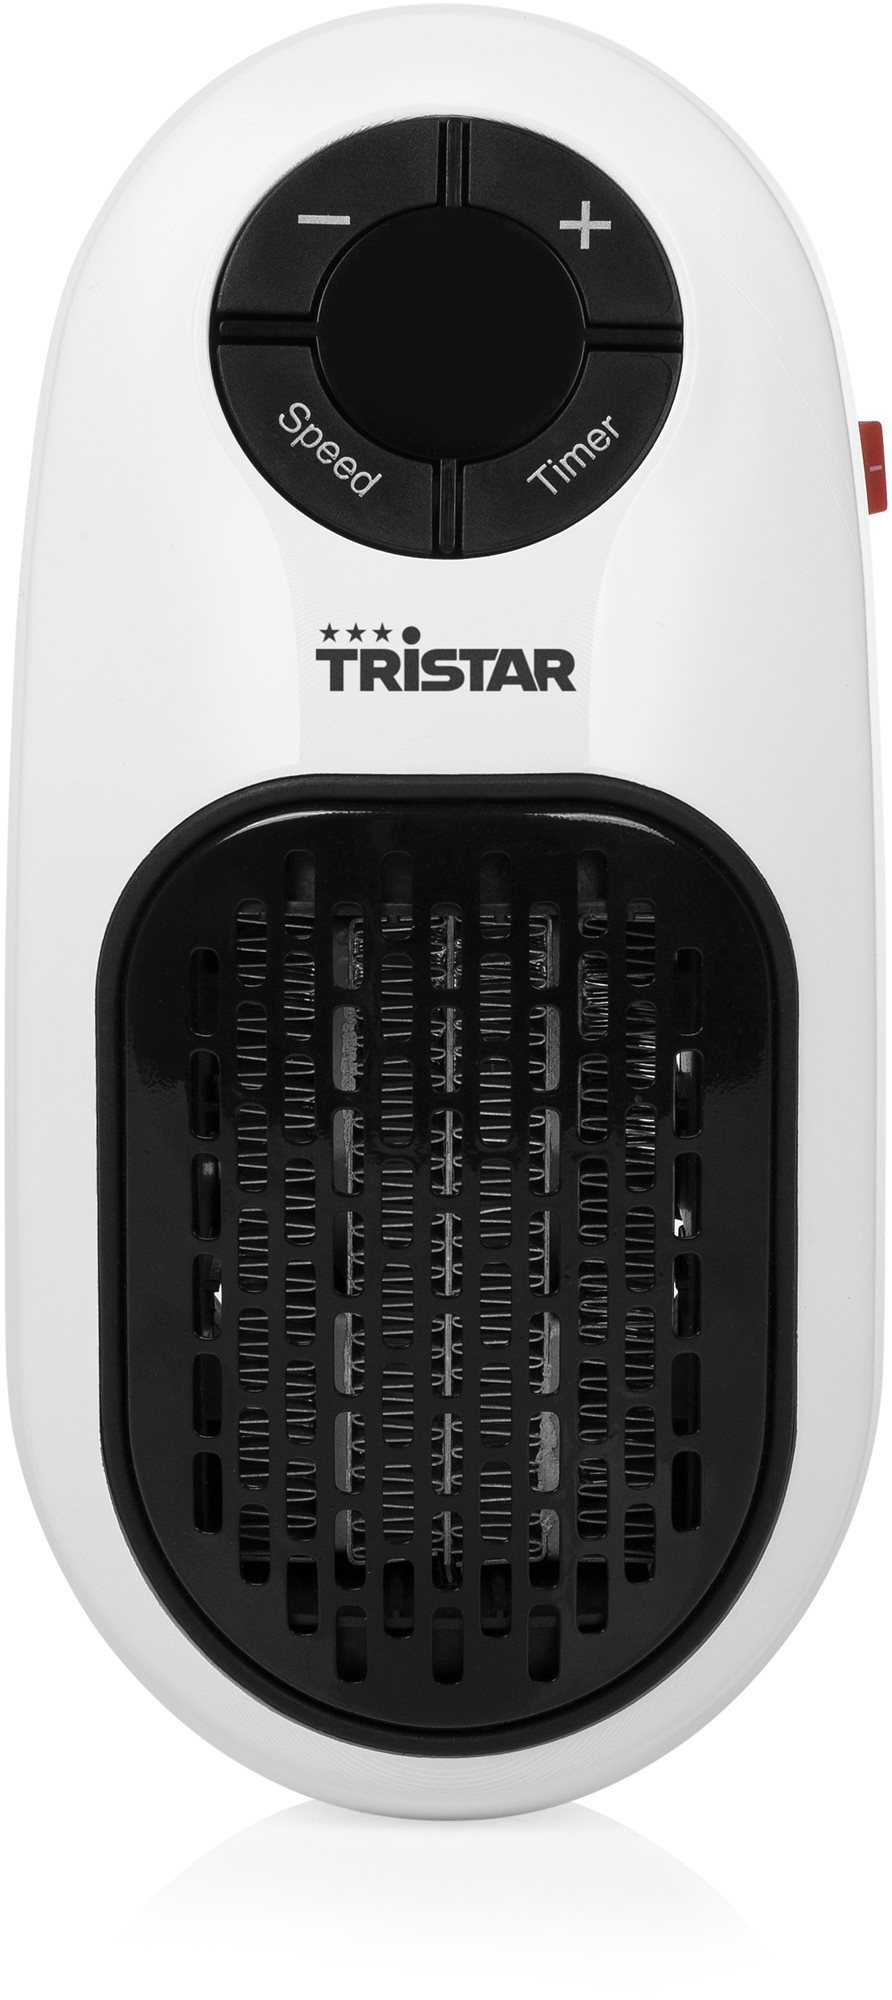 Tristar KA-5084